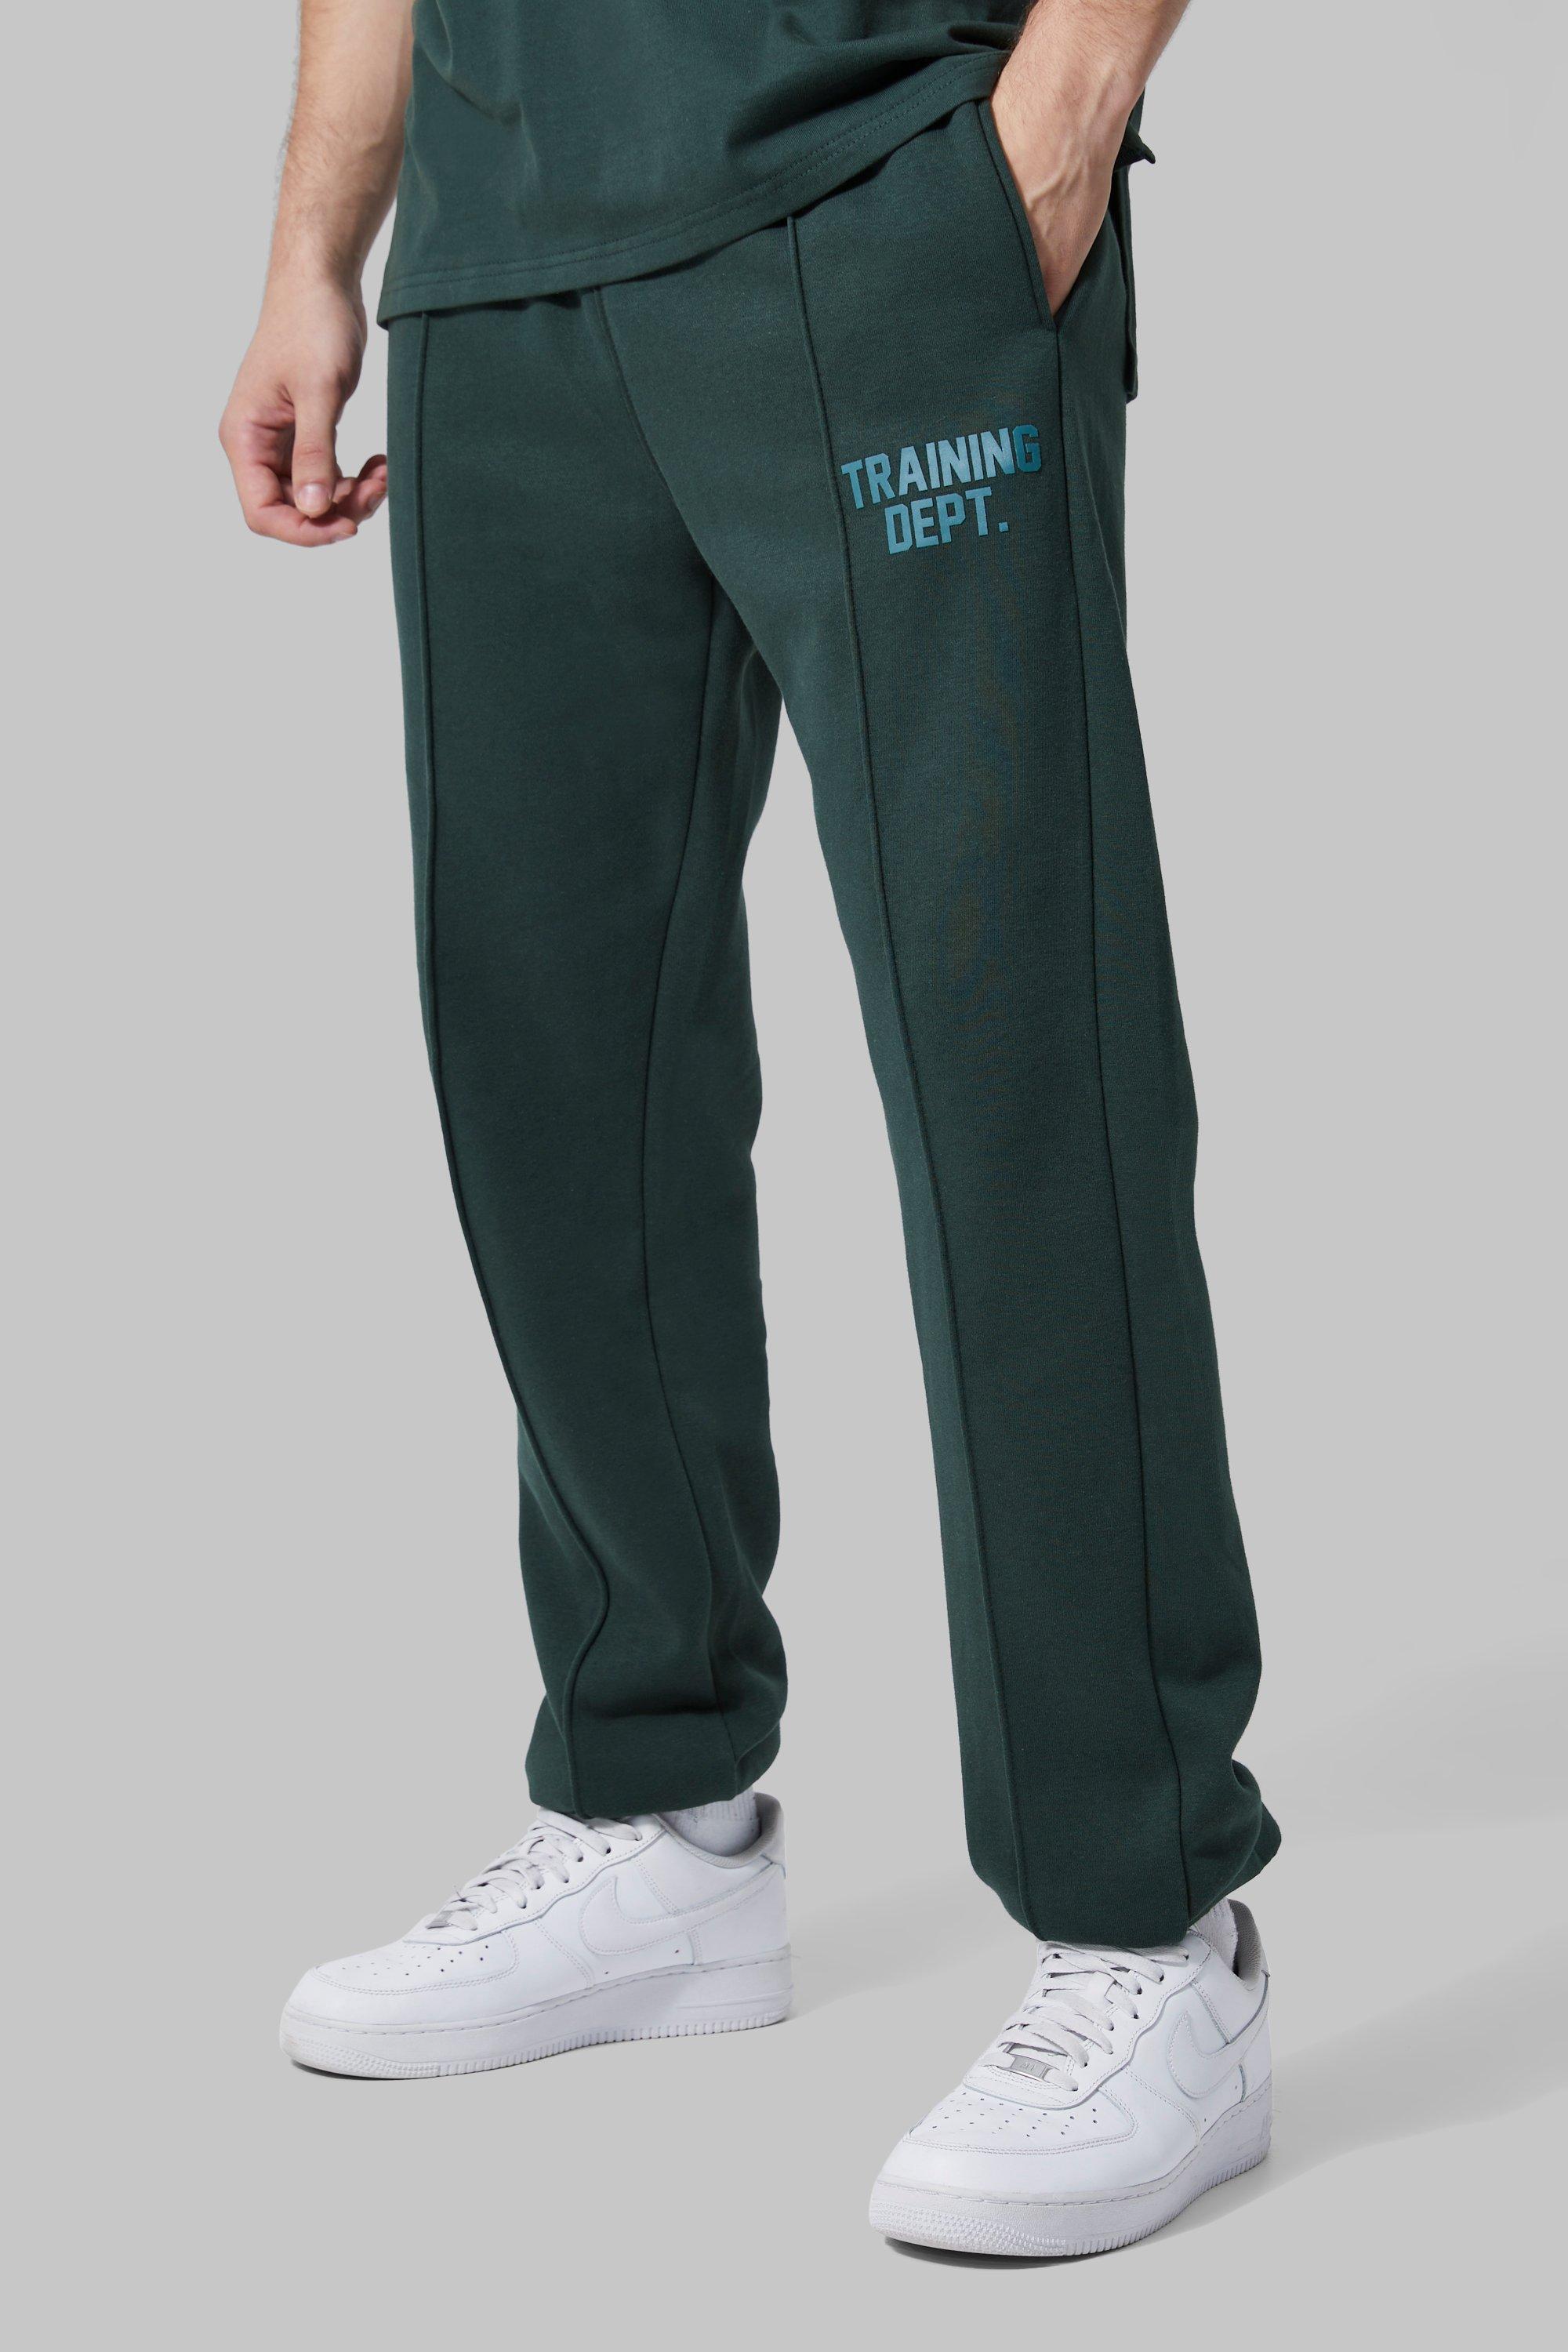 Image of Pantaloni tuta Tall Active Training Dept Slim Fit, Verde